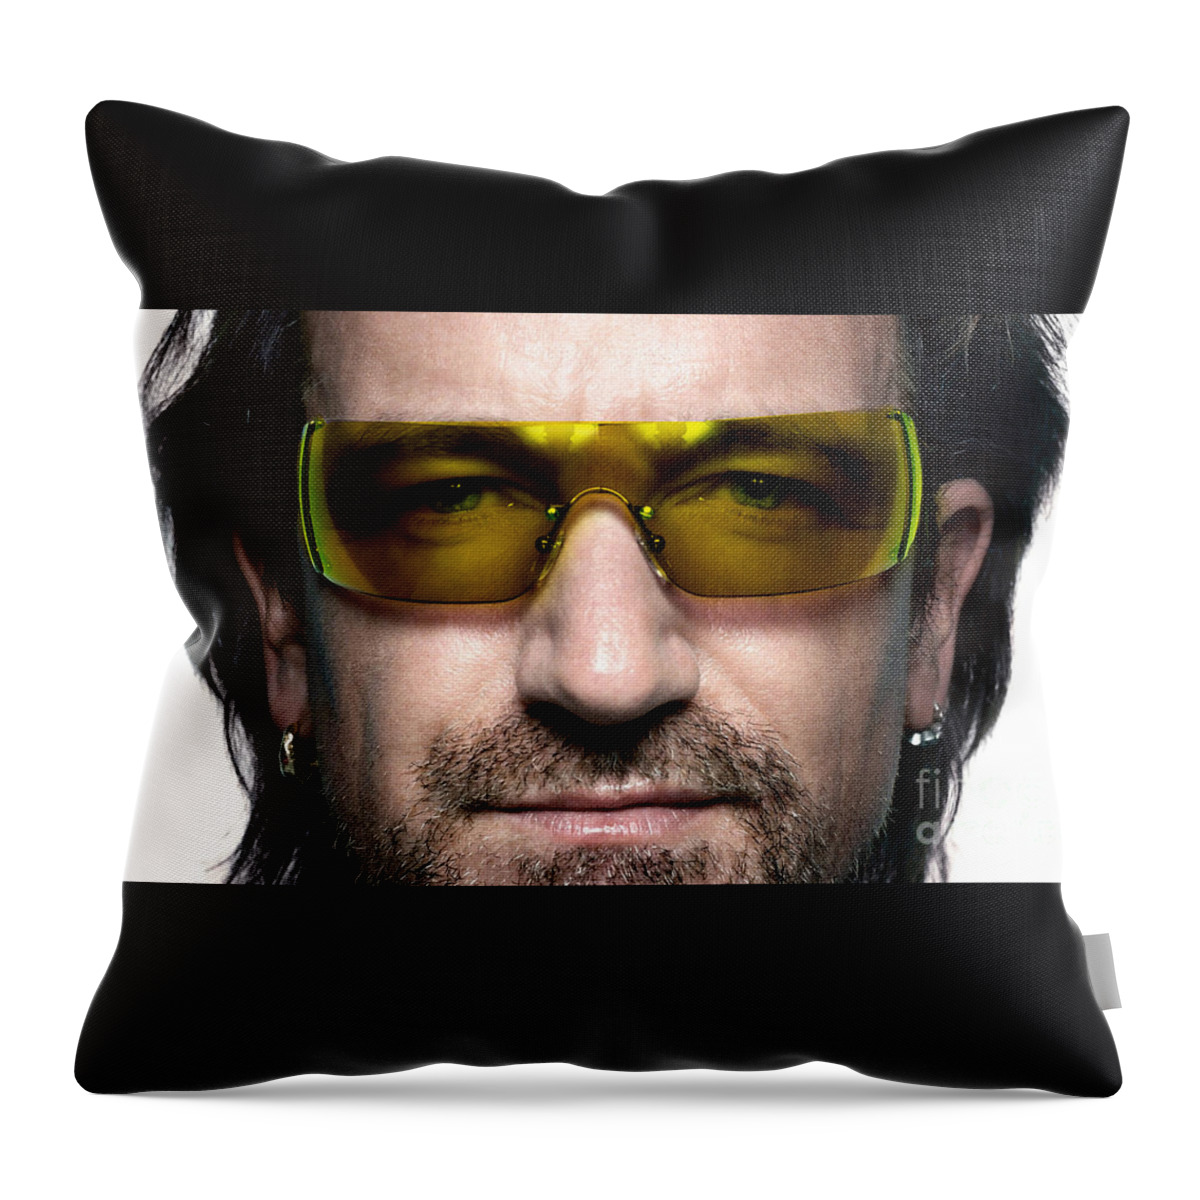 U2 Photographs Mixed Media Throw Pillow featuring the mixed media Bono by Marvin Blaine